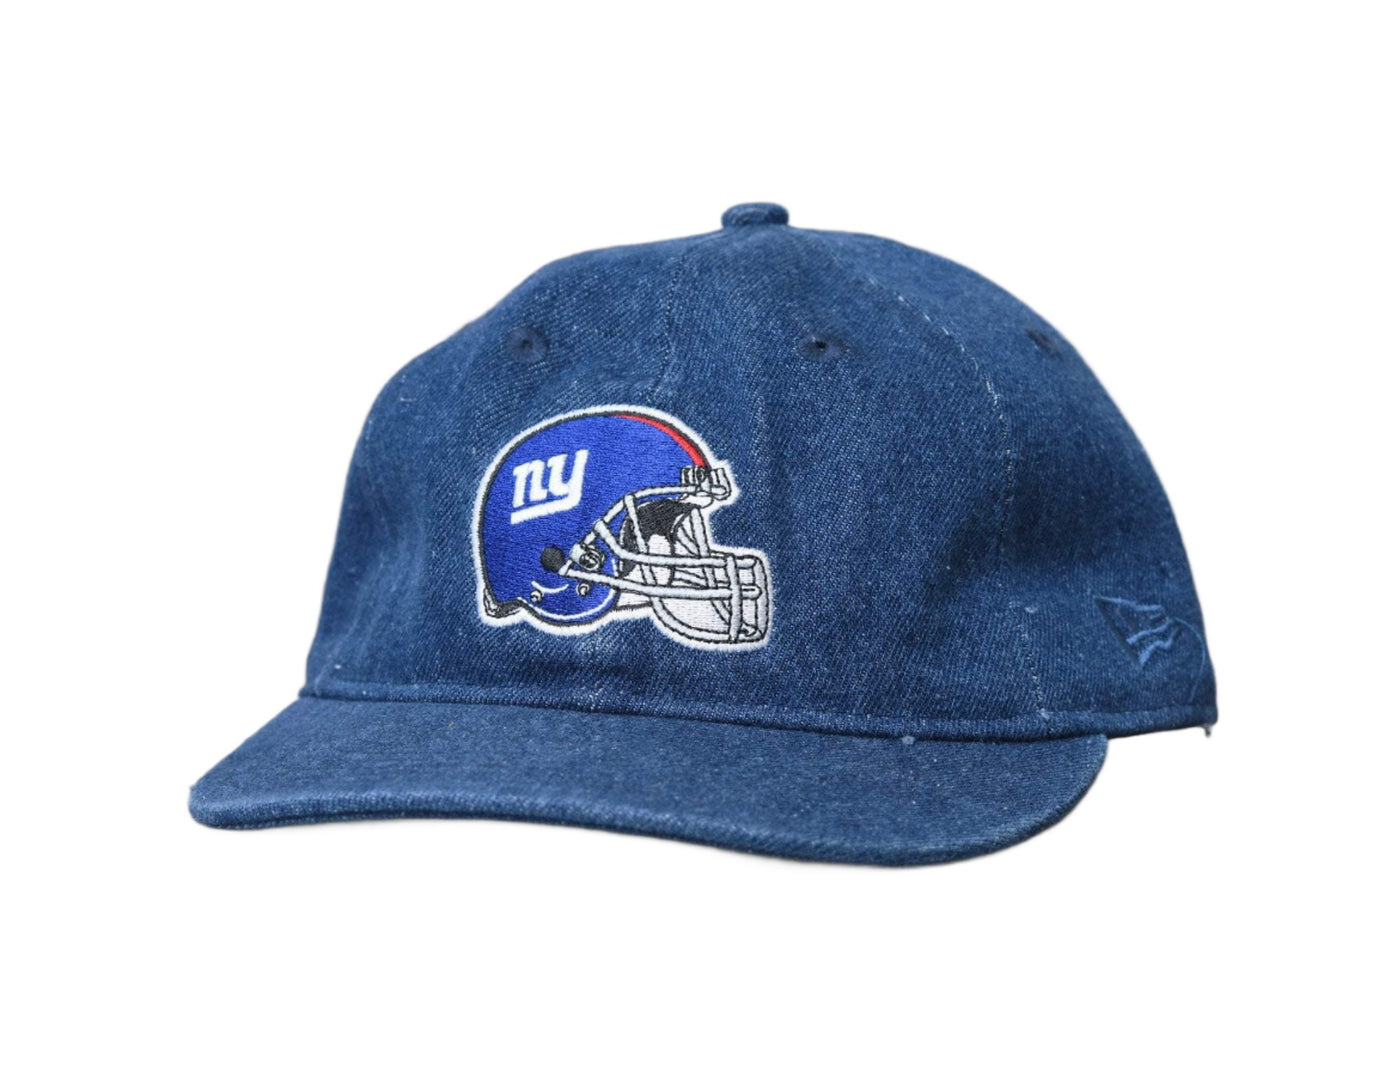 Cap Adjustable 9FIFTY Low Profile NFL Team Helmet Ny Giants New Era